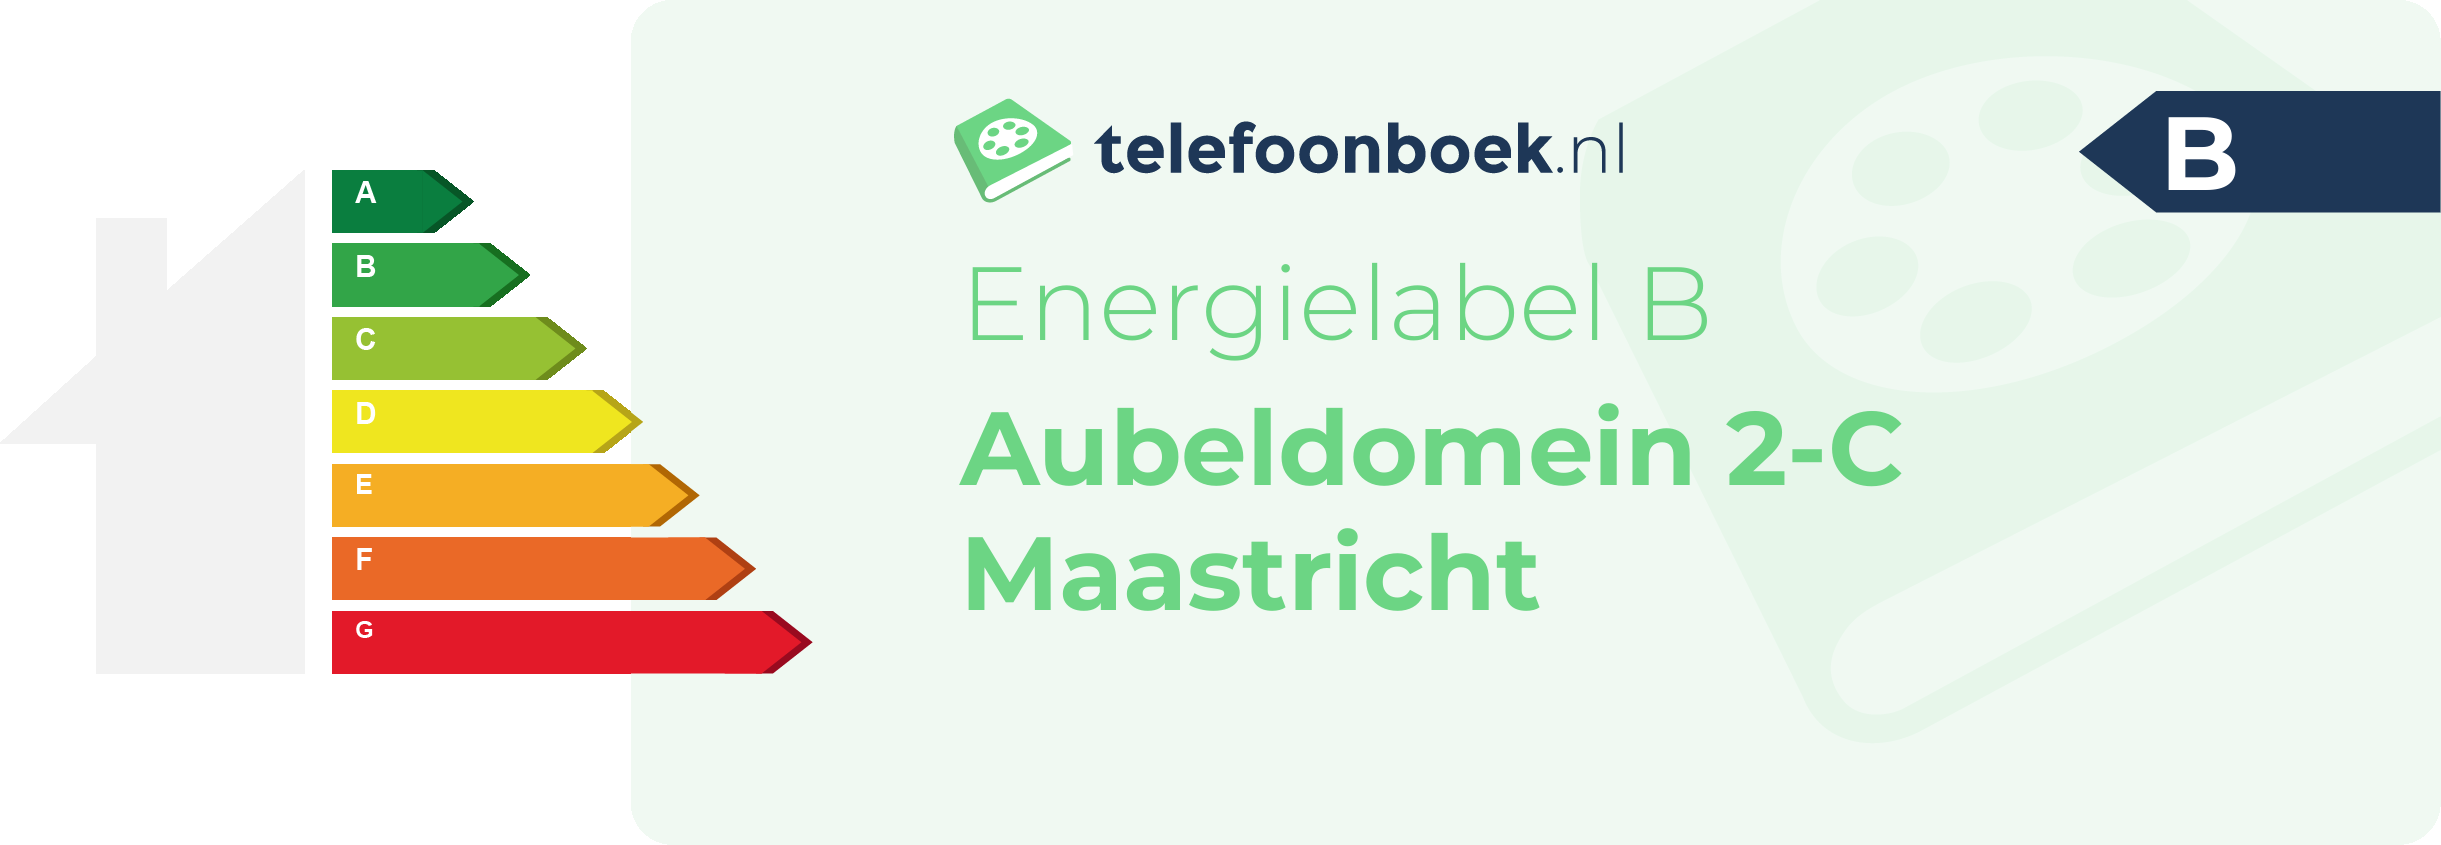 Energielabel Aubeldomein 2-C Maastricht